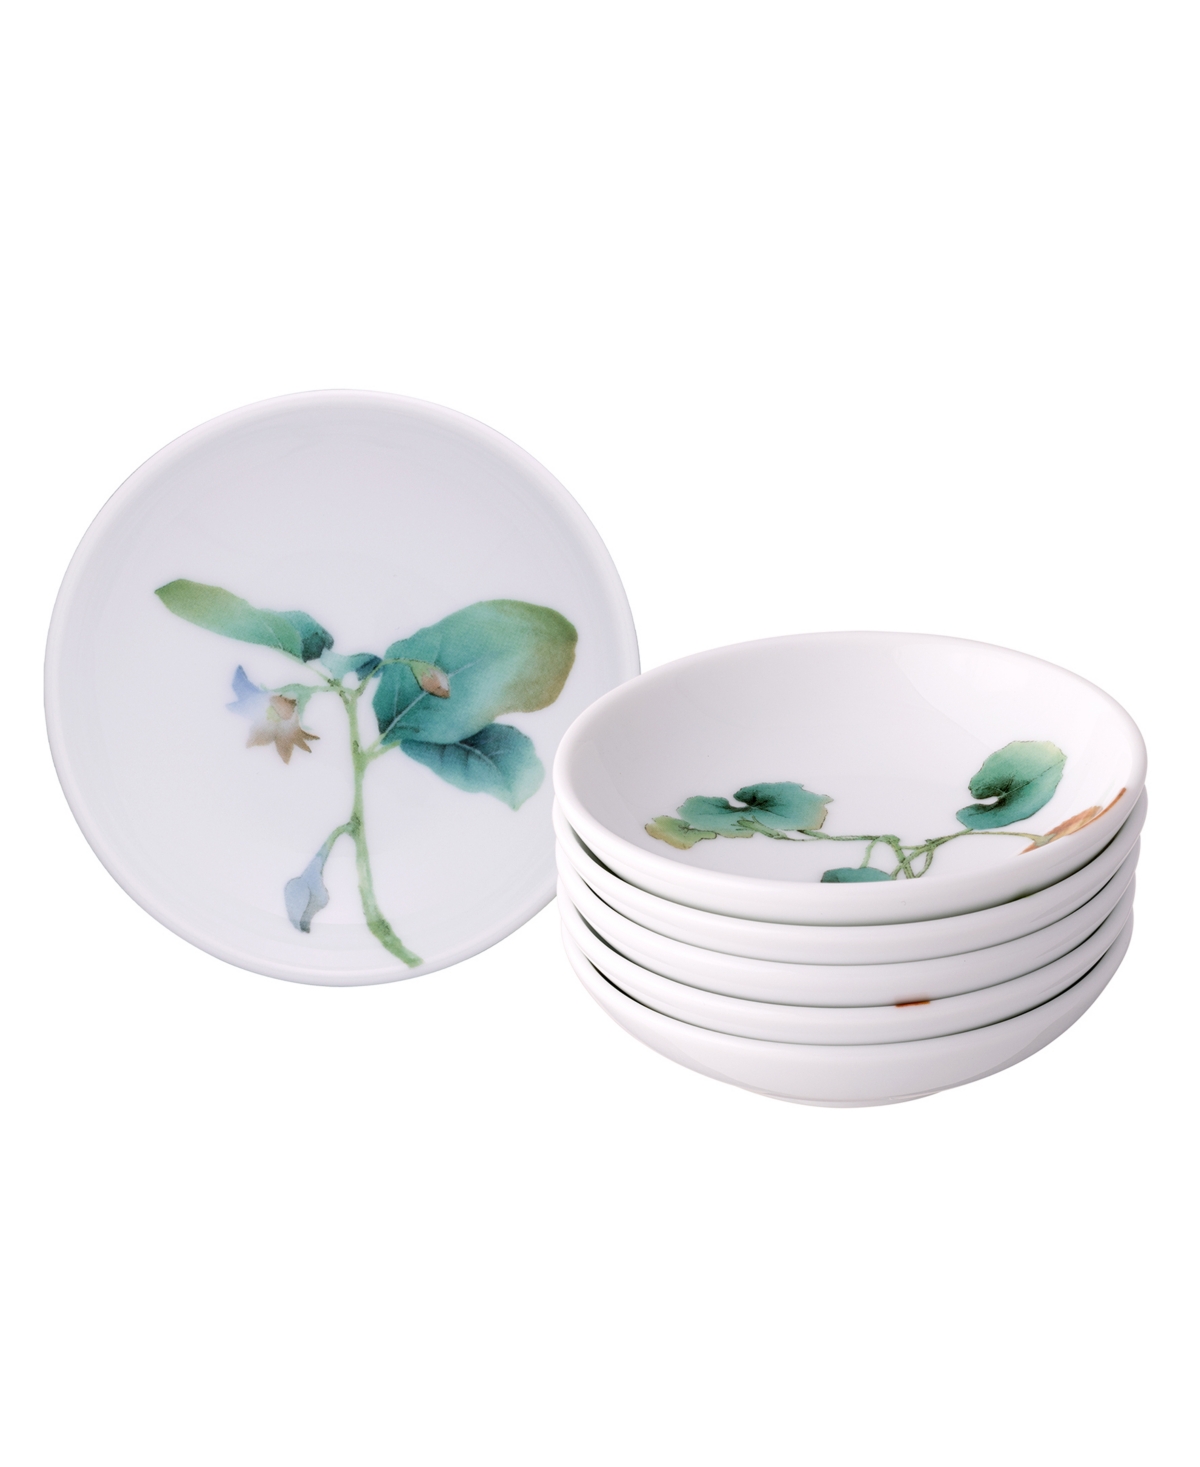 Kyoka Shunsai Small Plates Set/6 - Multi